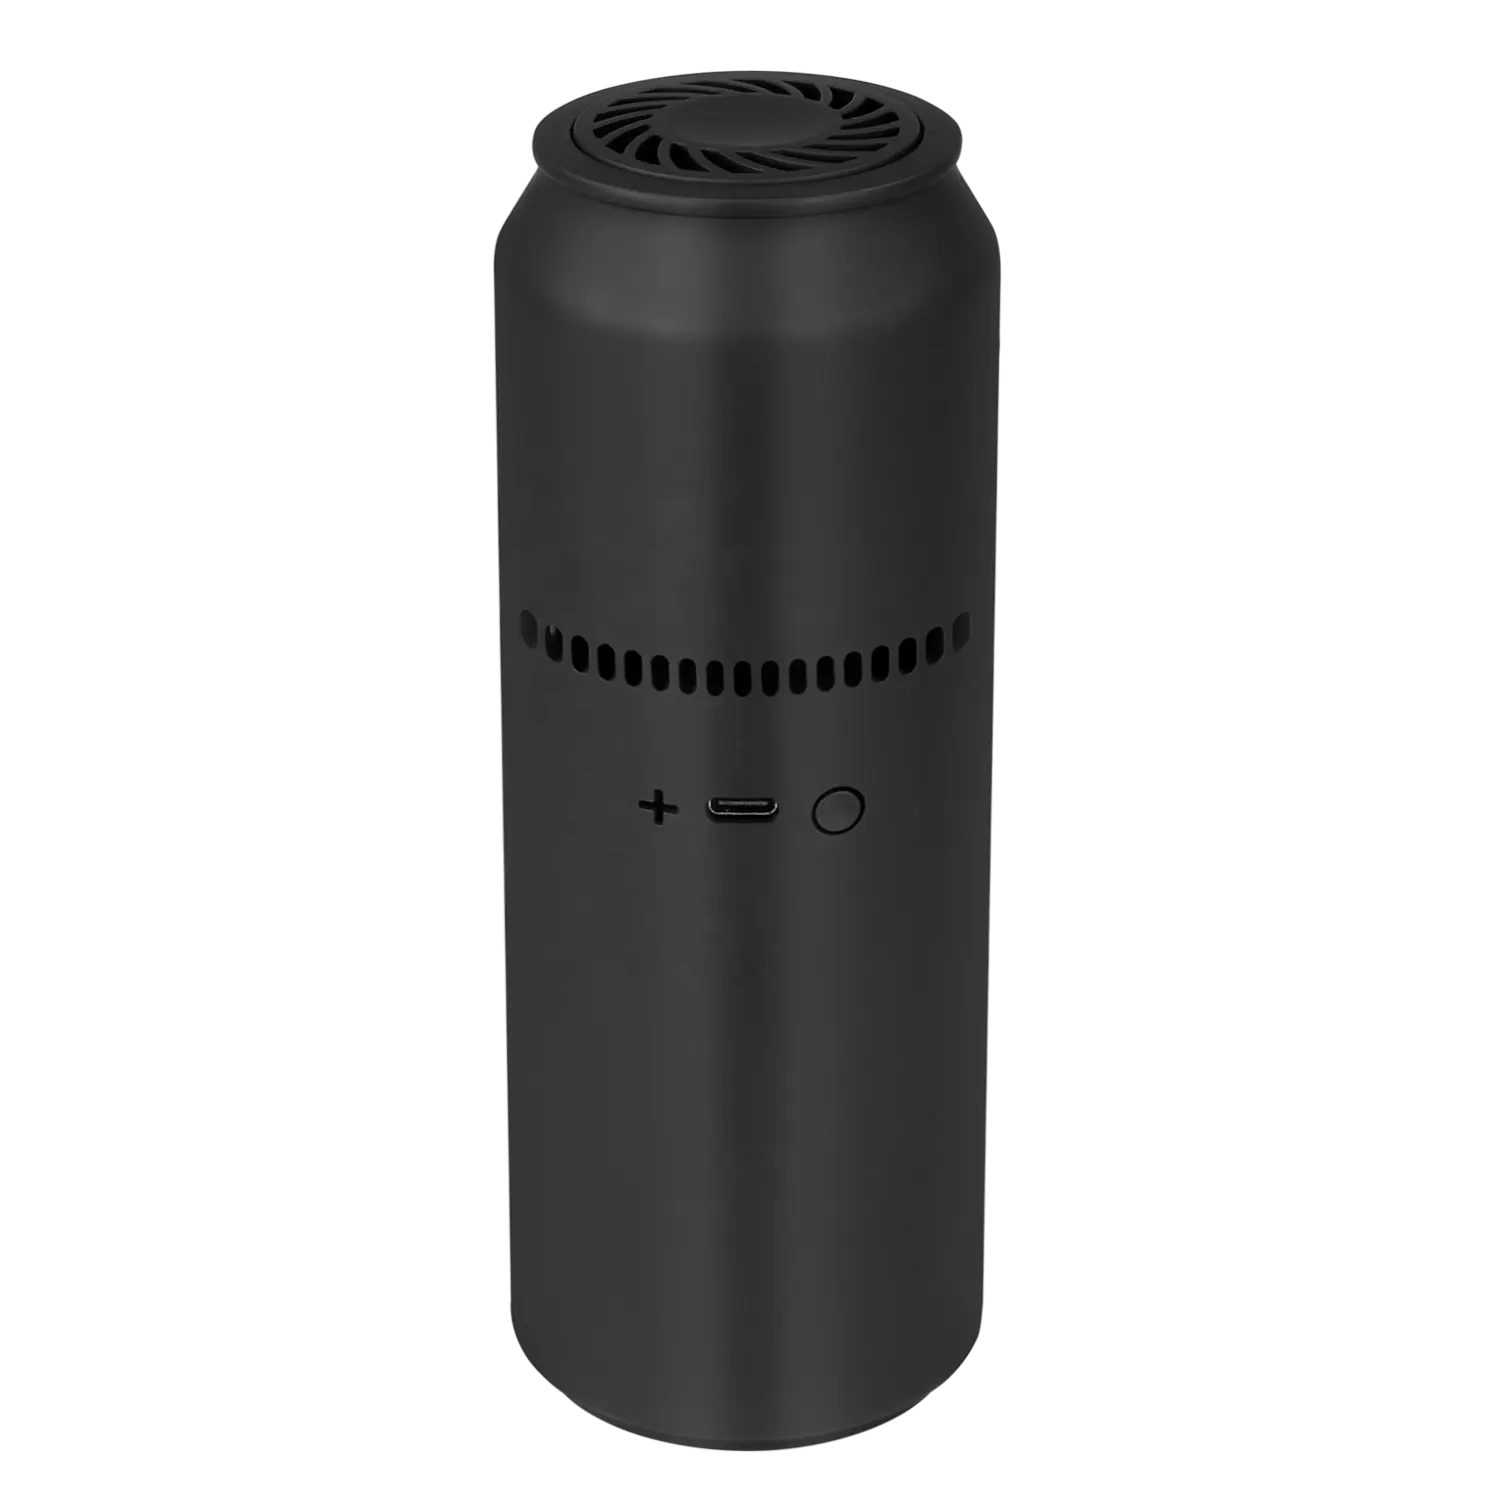 EddaAir CE Bipolar Battery operated portable mini usb cup holder car air purifier for home desk travel